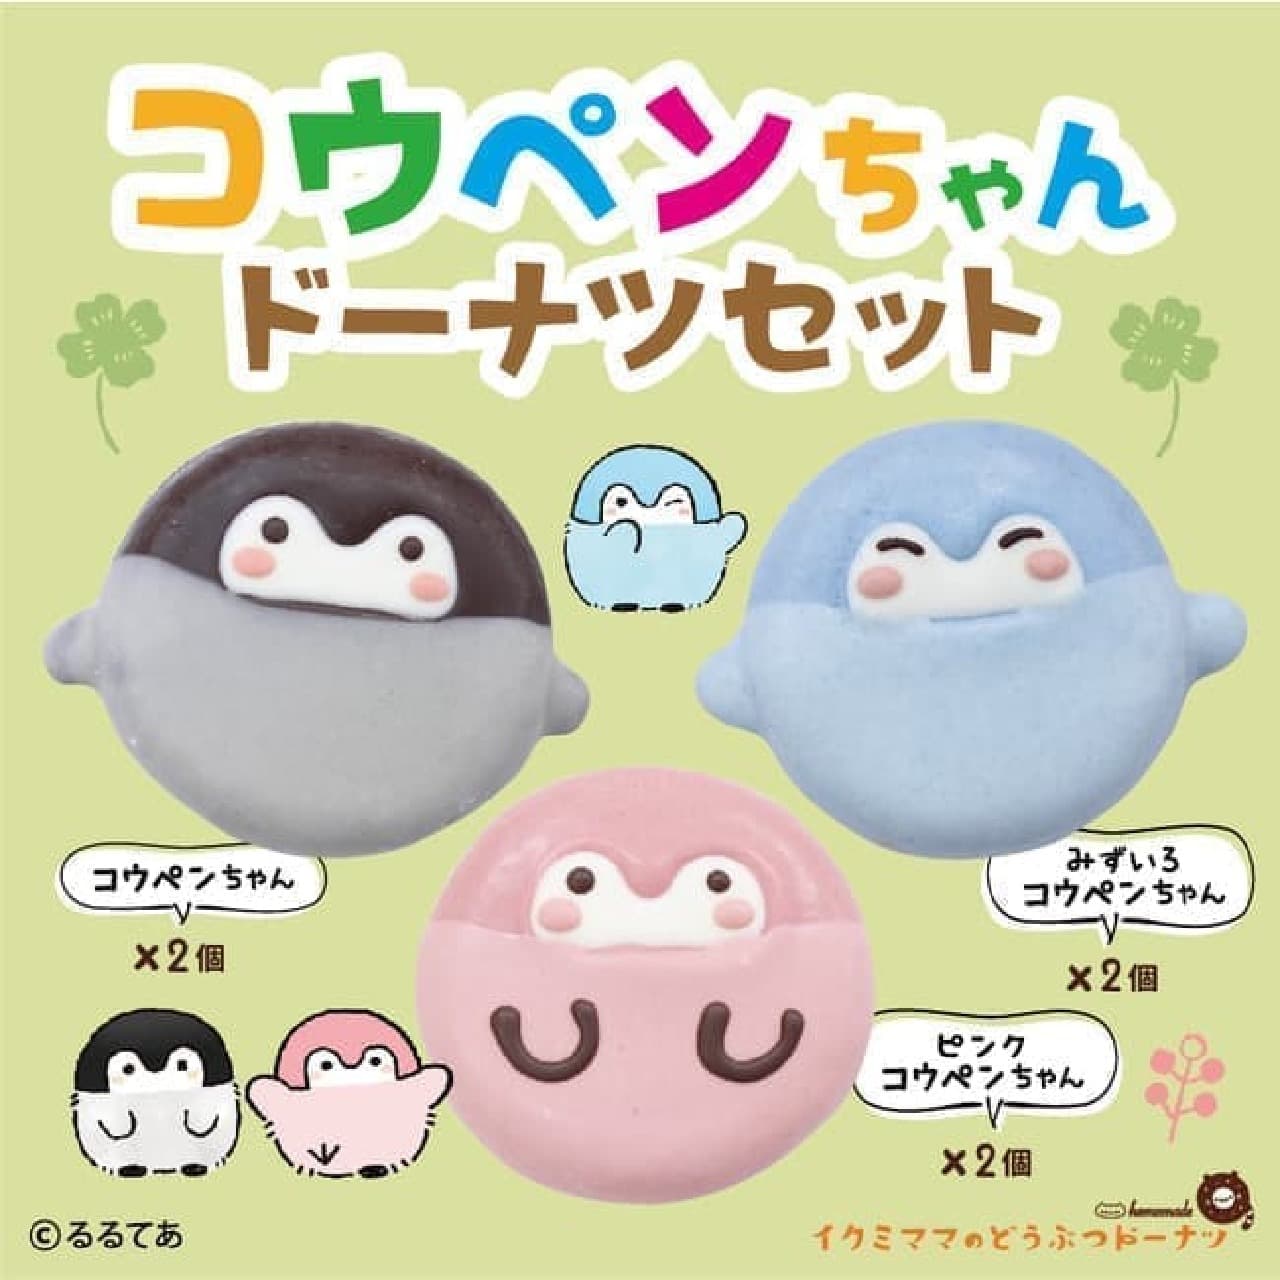 Ikumimama's animal donut "Koupen-chan" collaboration donut